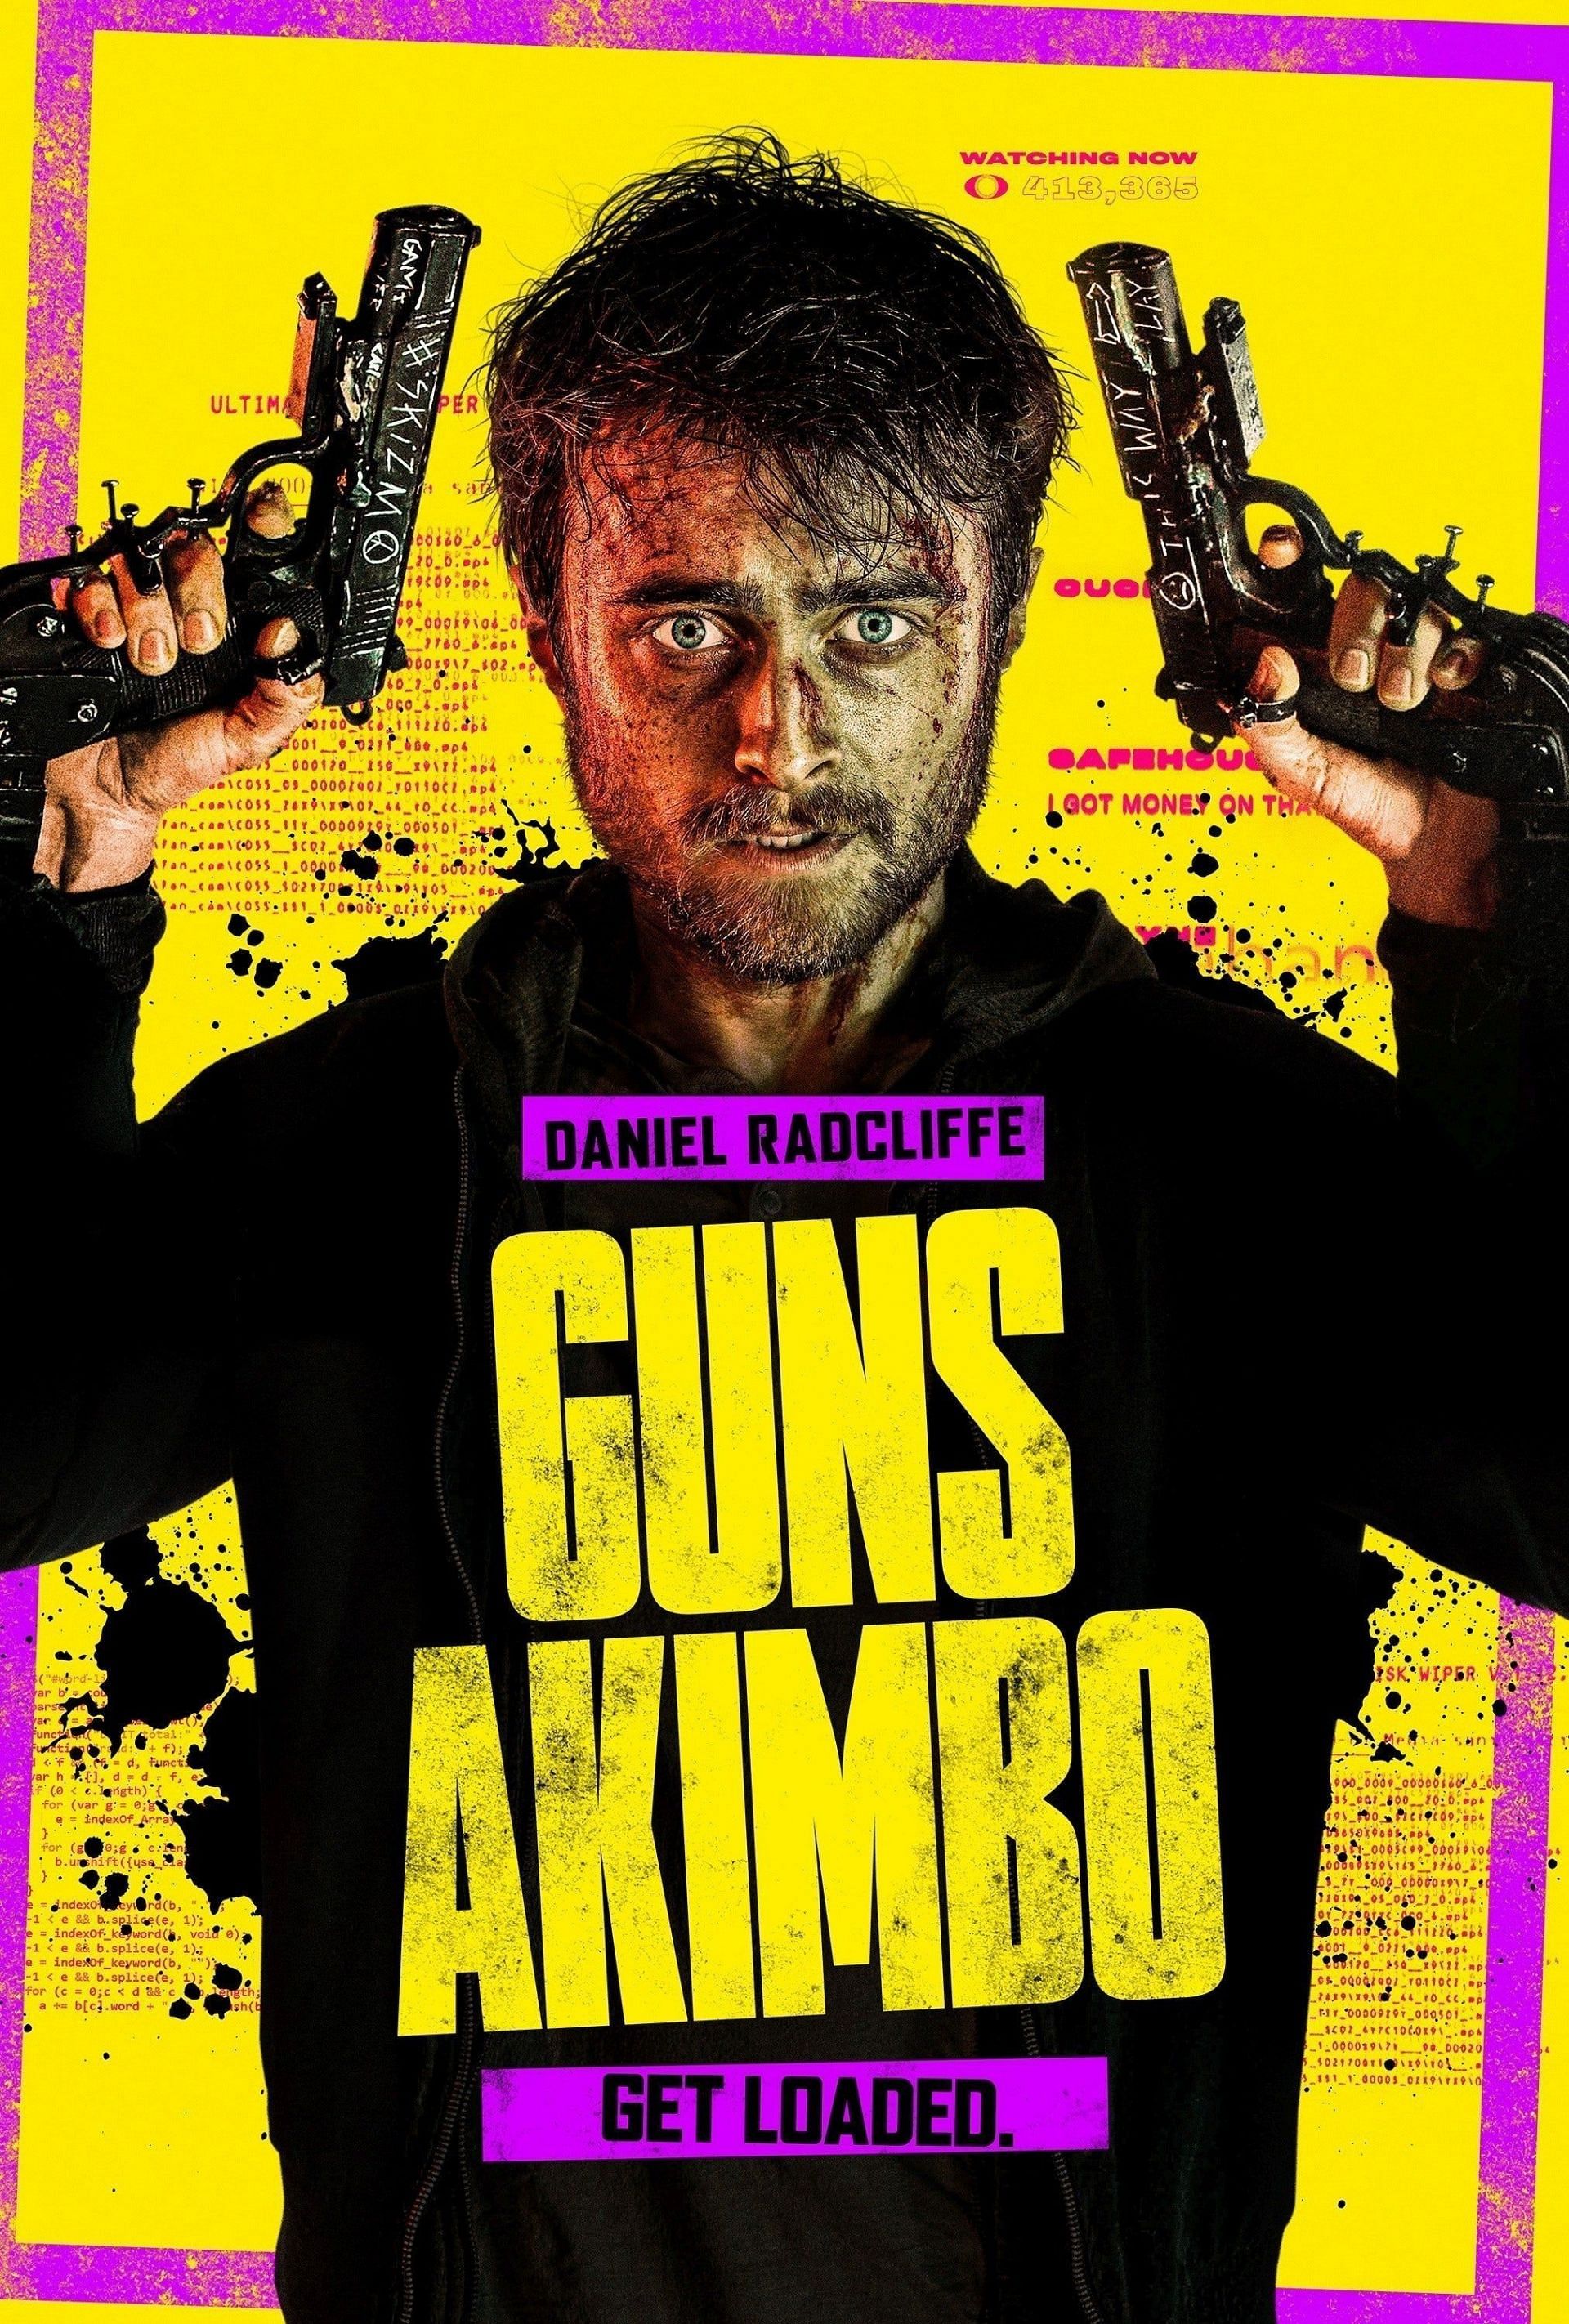 Guns Akimbo (Image via Madman Entertainment)